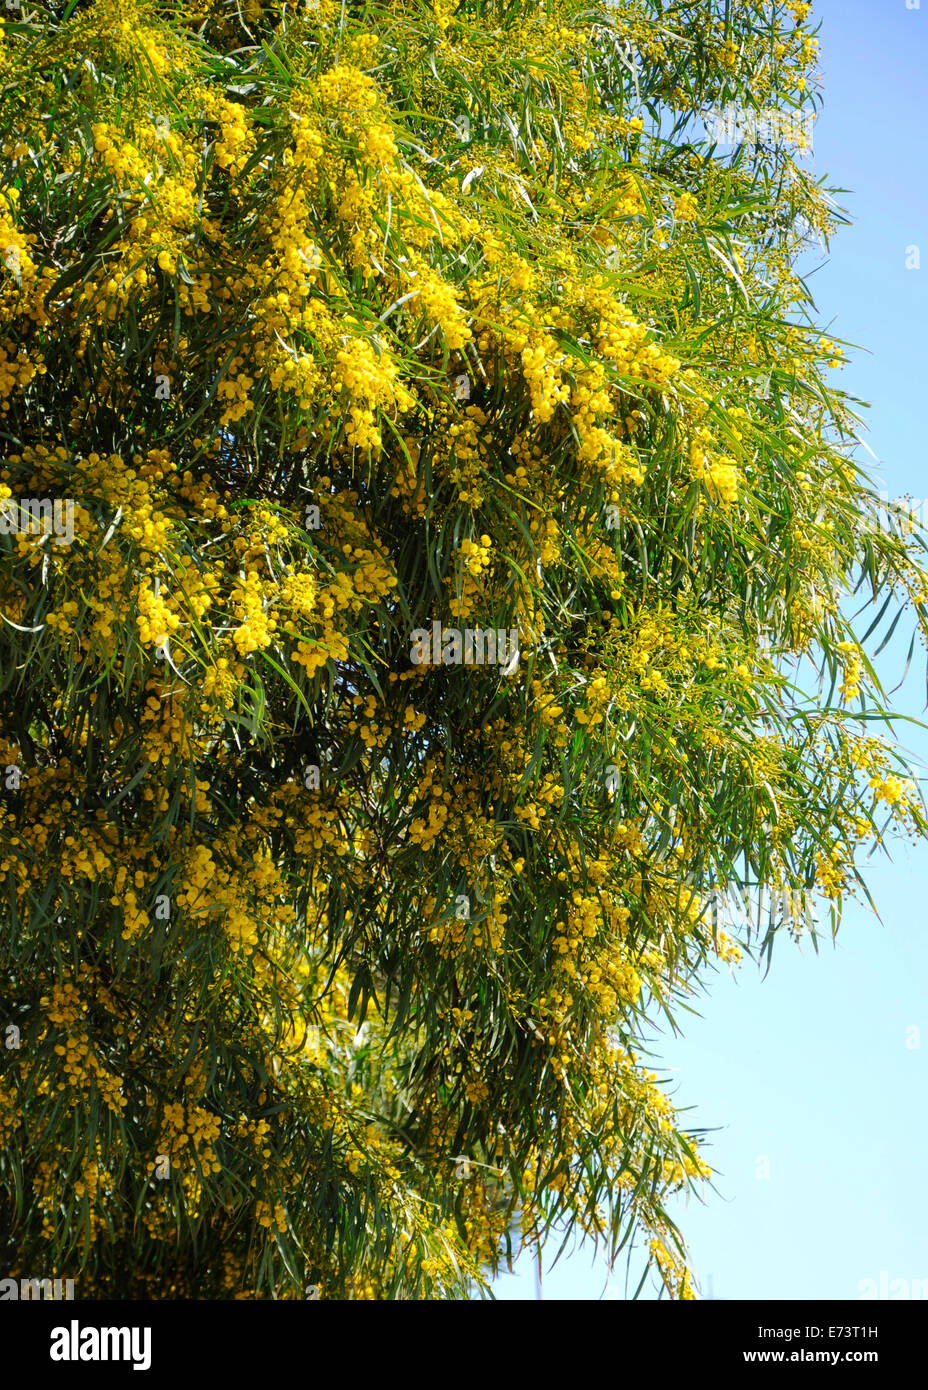 Beautiful Australian Wattle Acacia Tree in full winter bloom against a blue  sky Stock Photo - Alamy